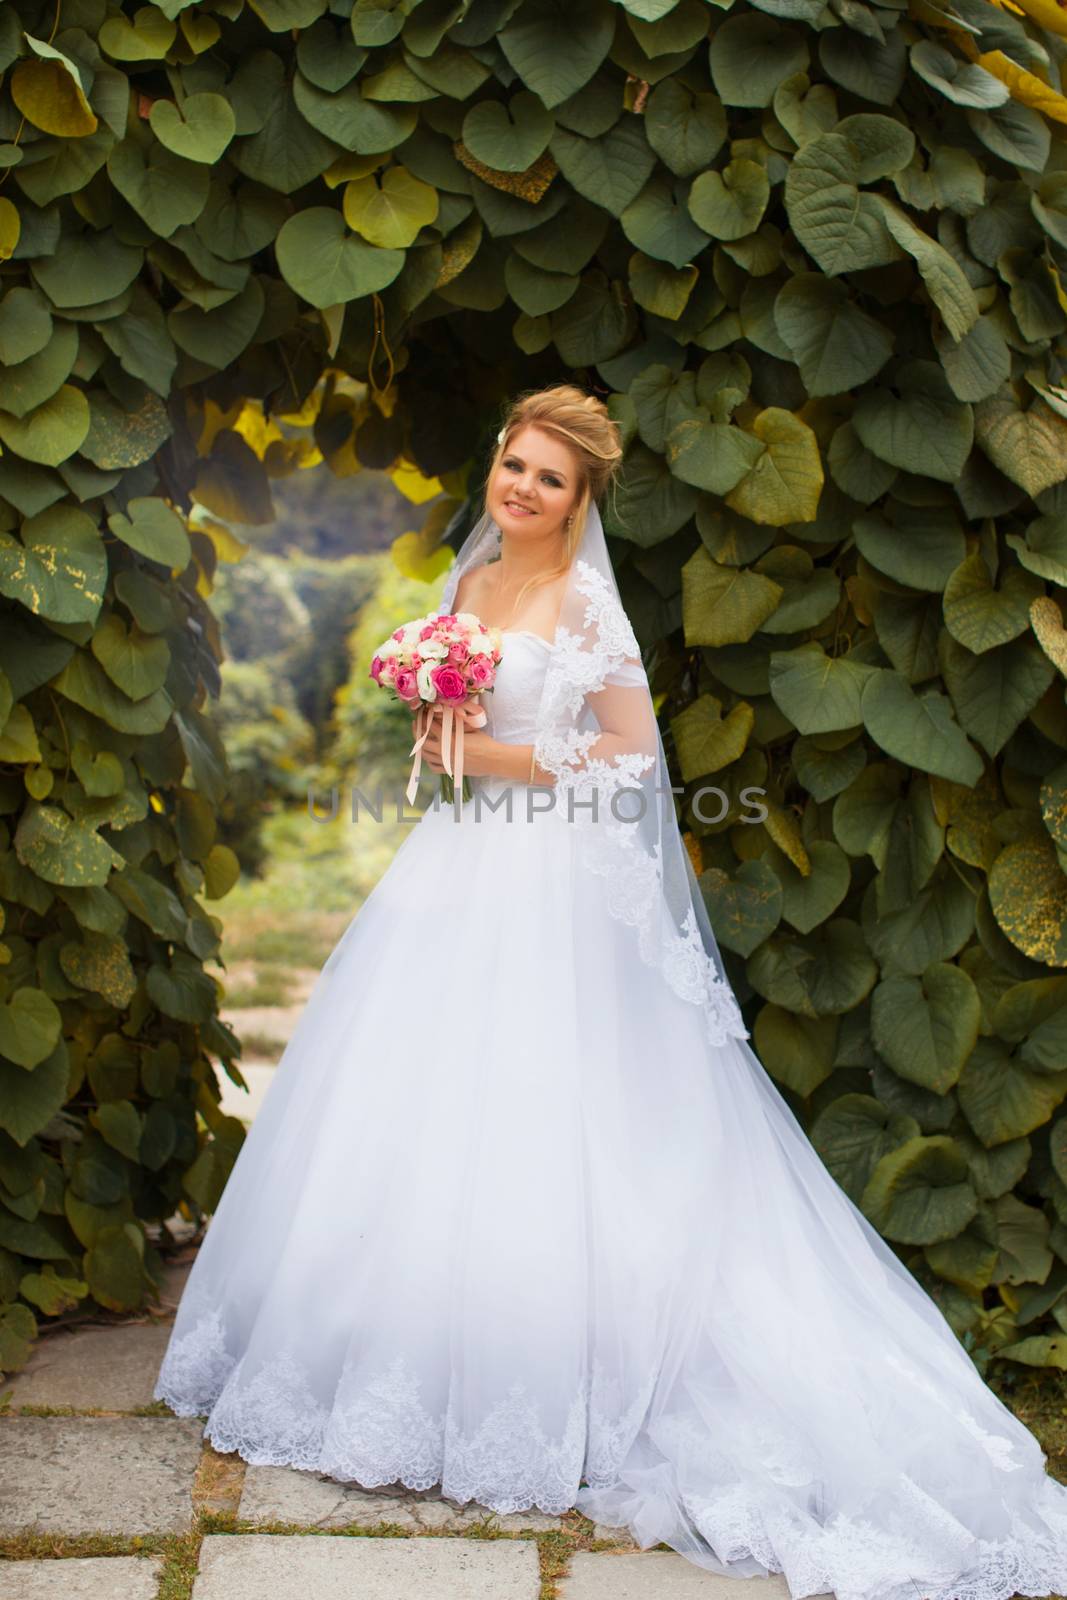 Stylish bride in a white wedding dress in summer day